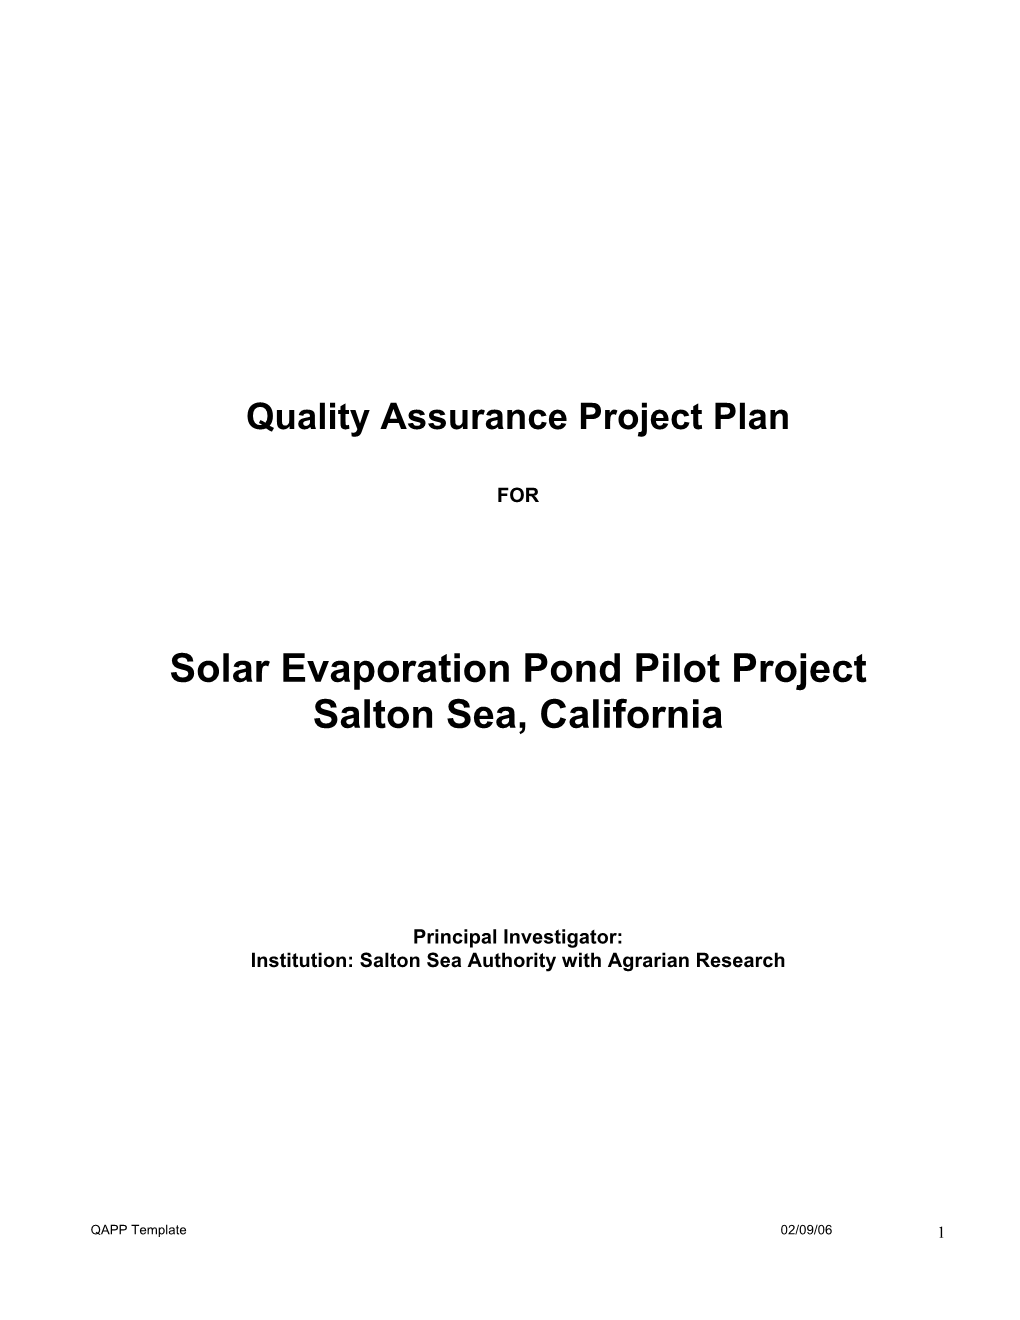 Quality Assurance Project Plan for Solar Evaporation Pond Pilot